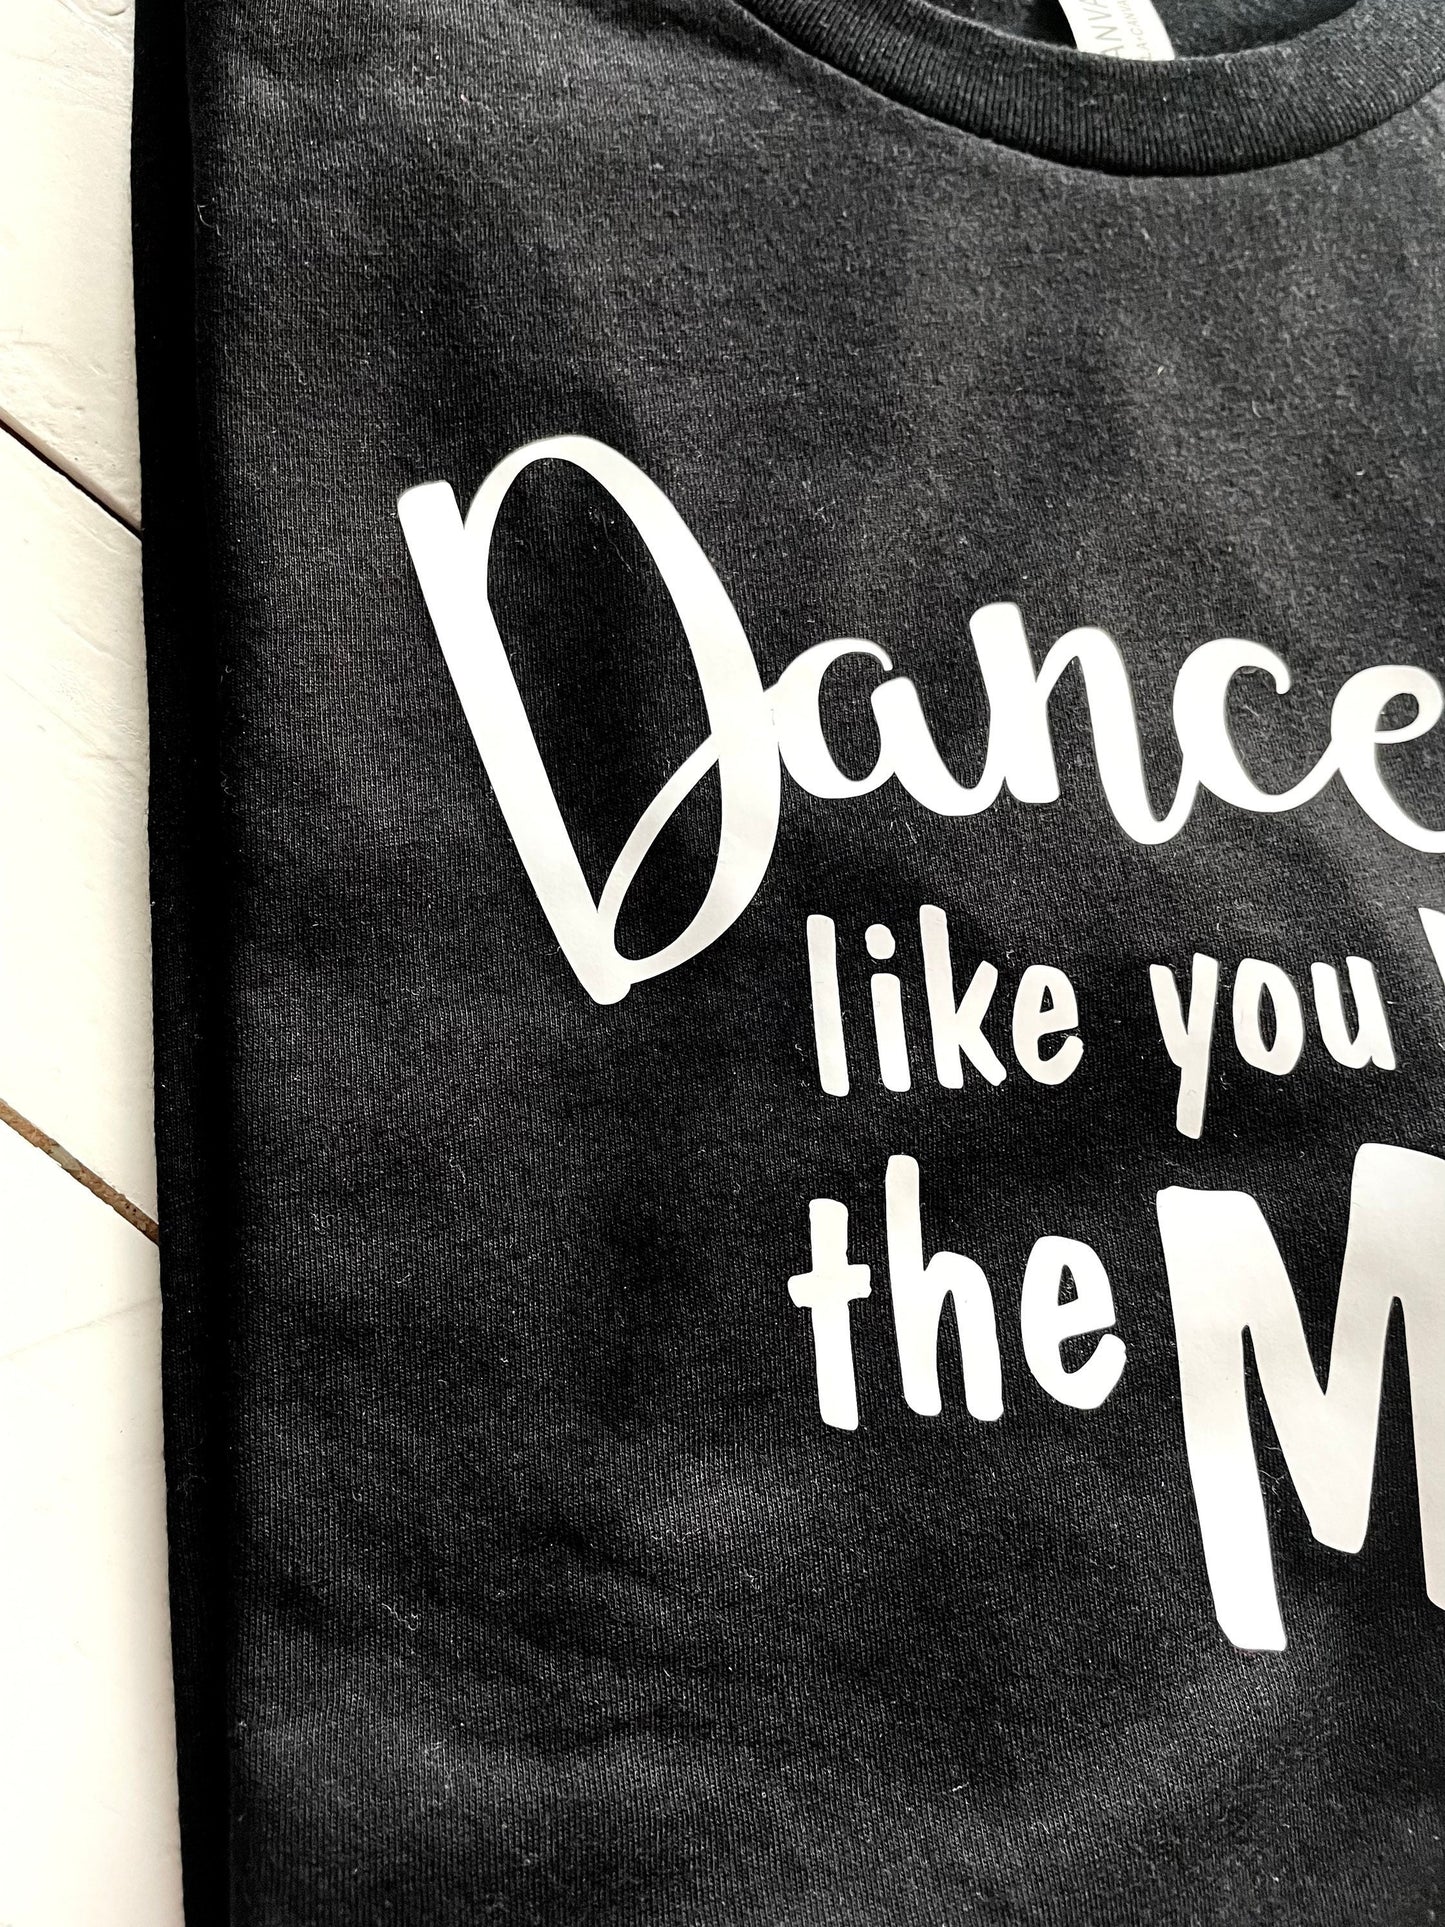 Dance like you need the money, Black T-shirt